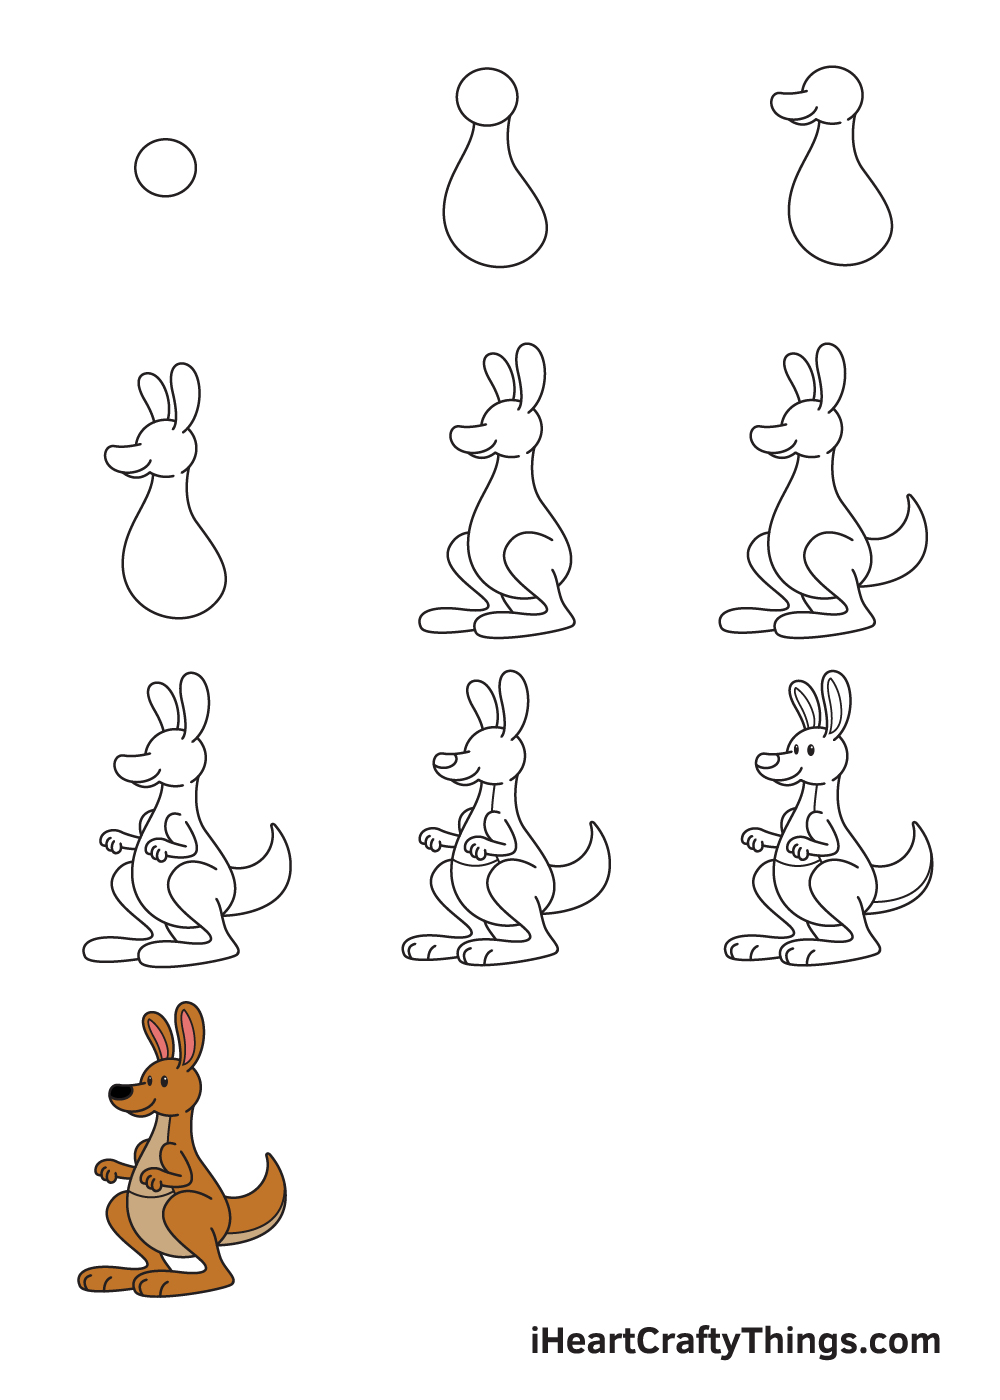 drawing kangaroo in 9 steps